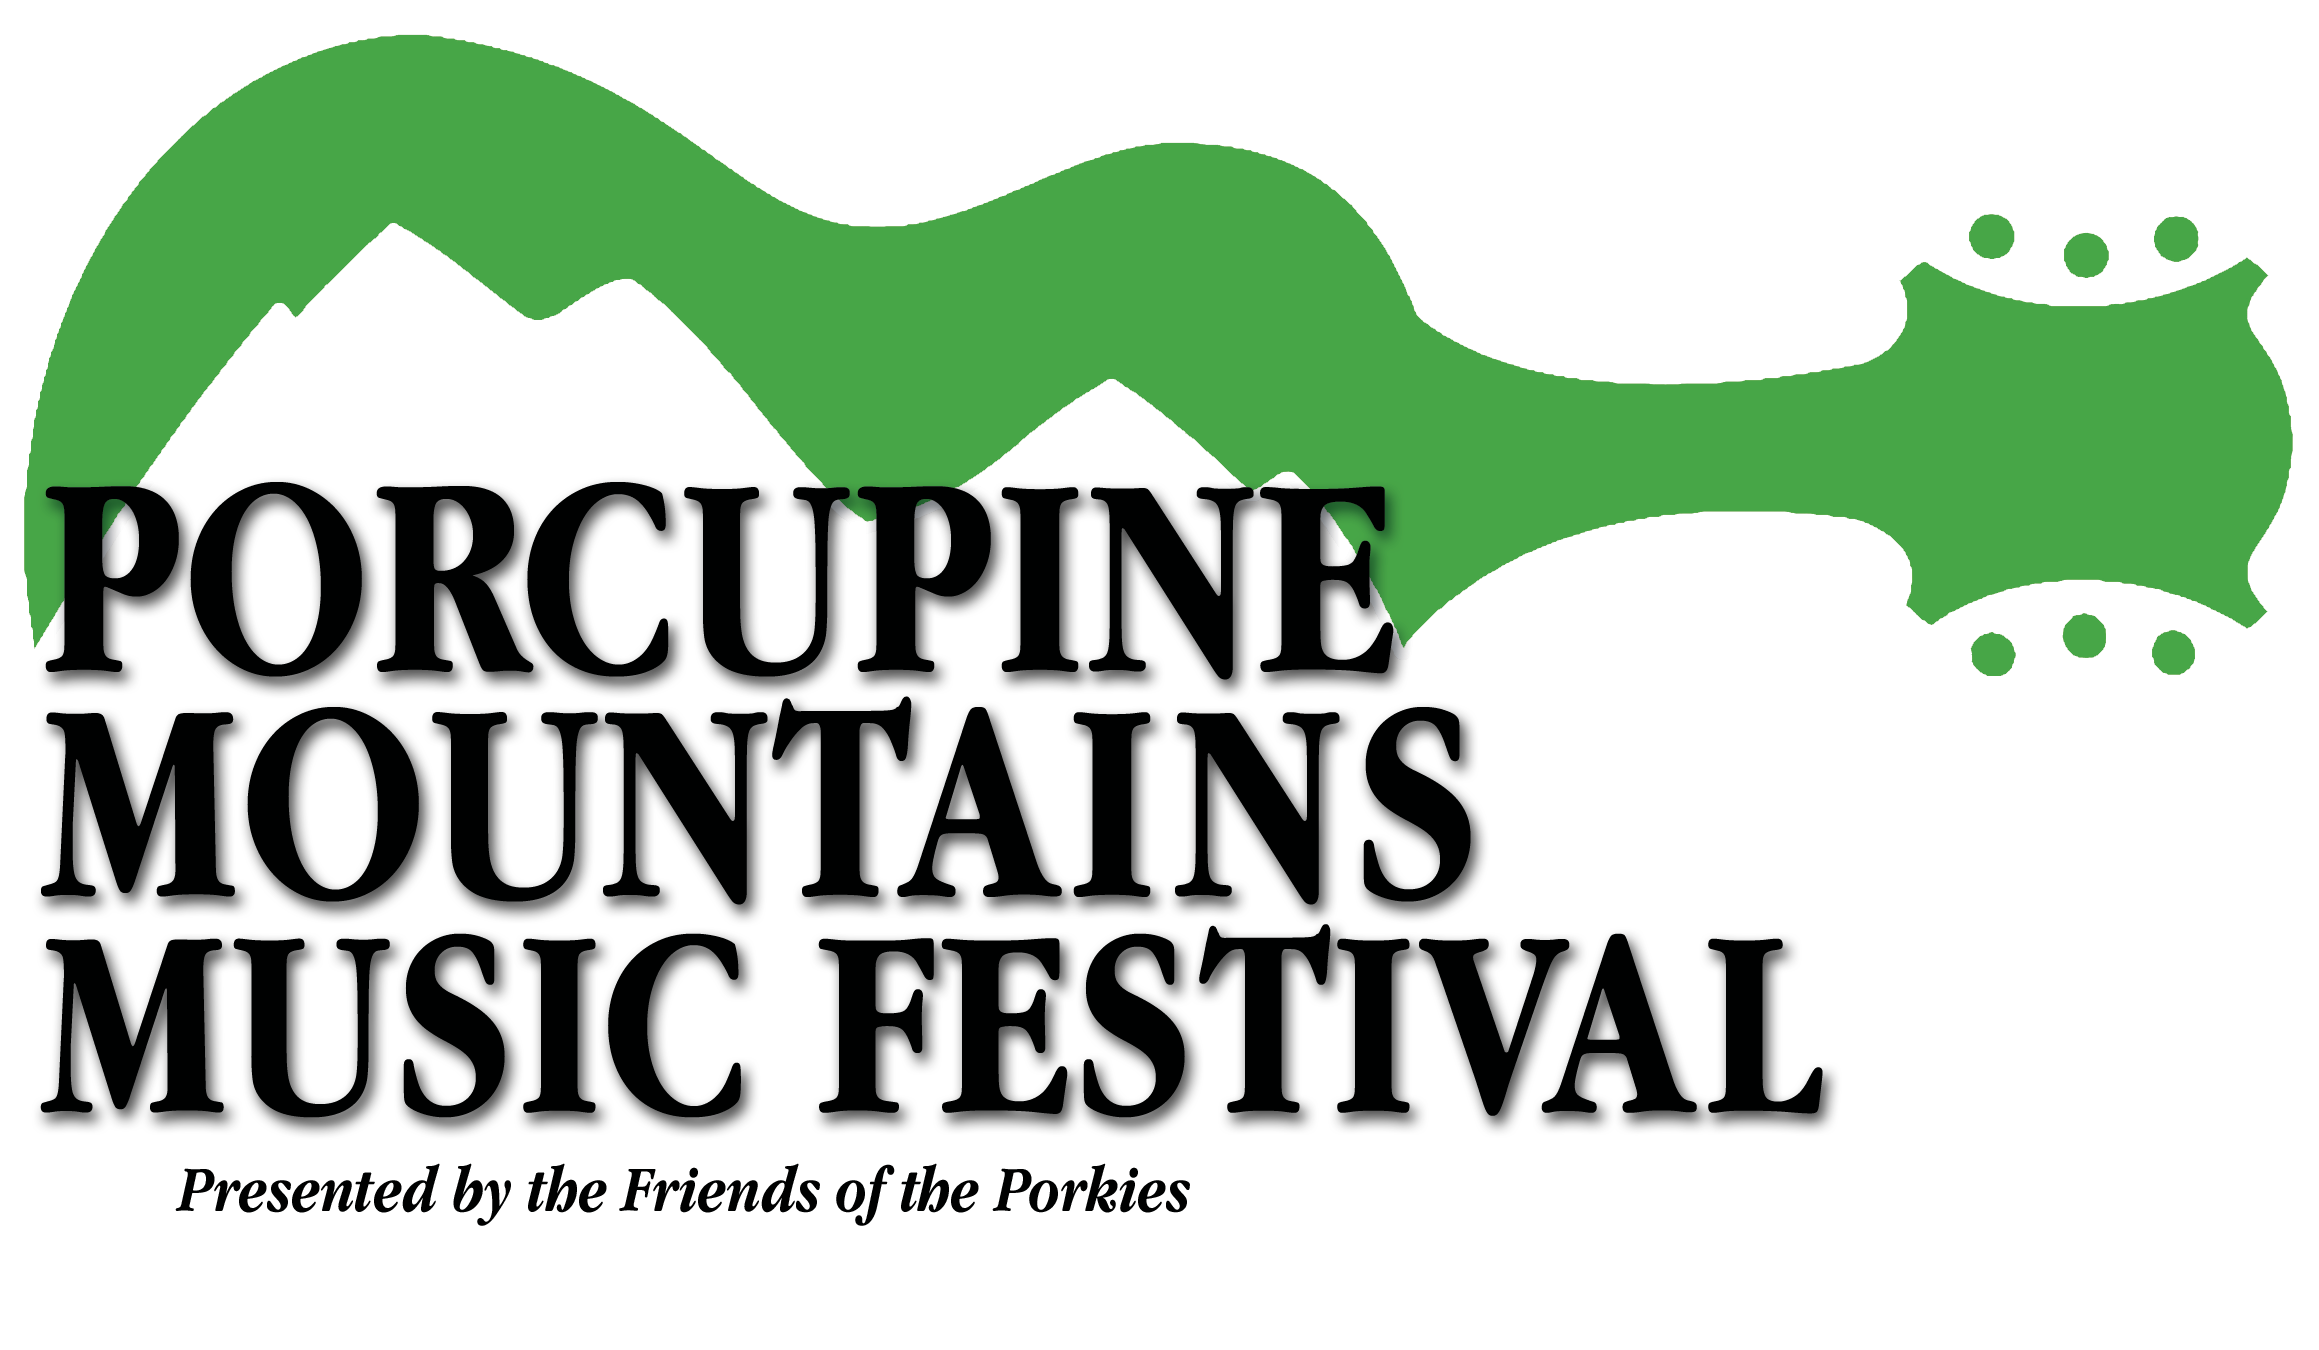 Porcupine Mountains Music Festival logo